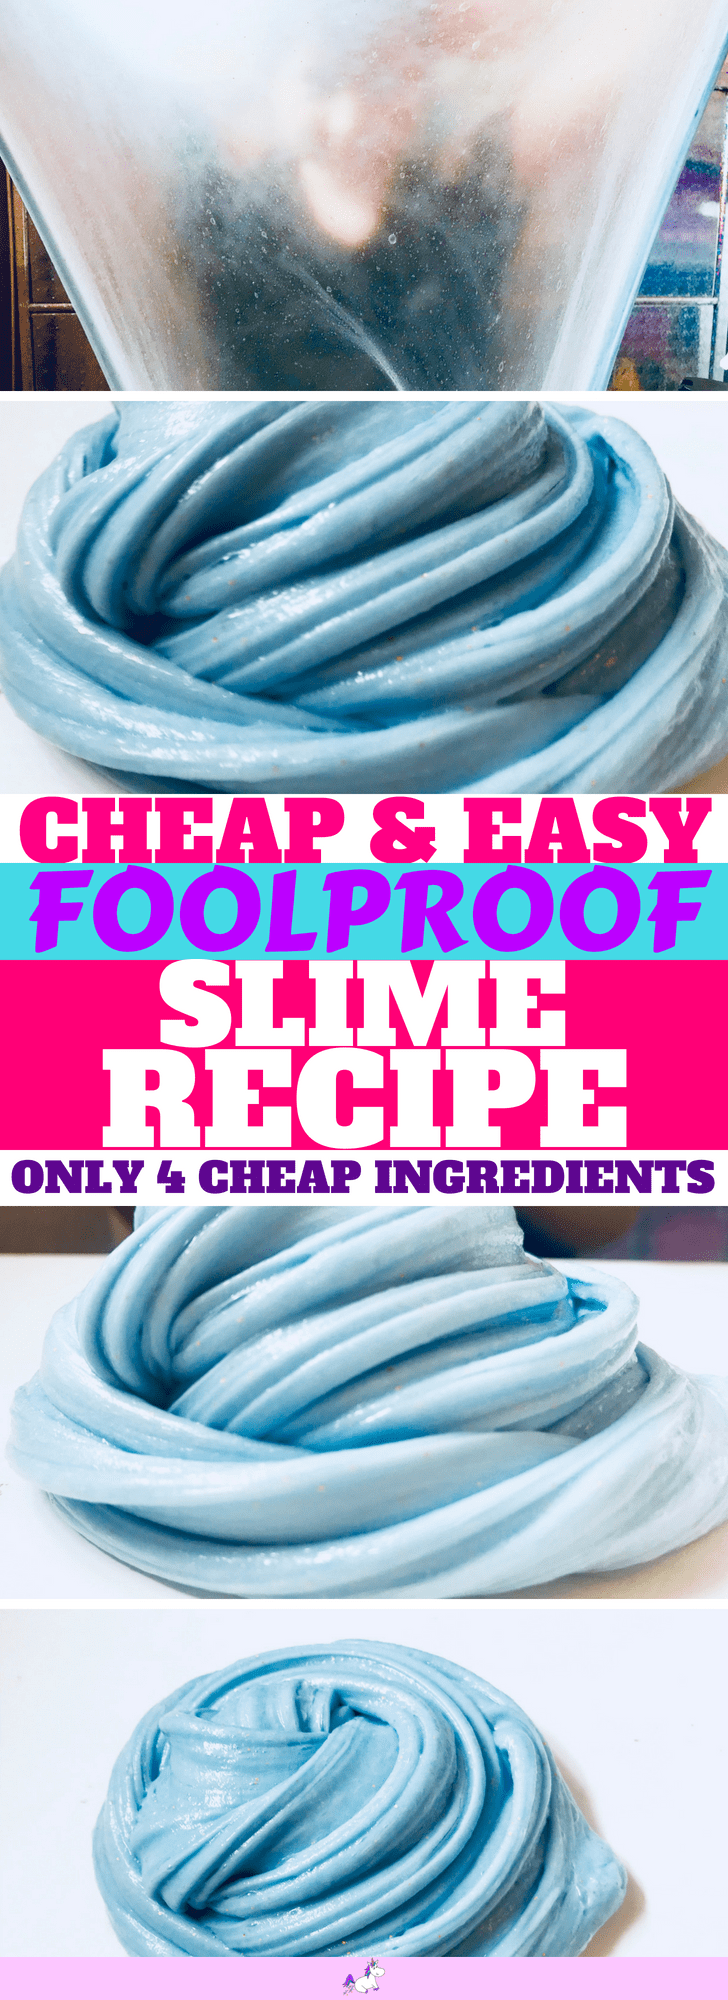 Cheap & Easy Foolproof slime recipe #Easy Slime Recipe #bestslimerecipe #stretchyslime #kidscraftactivities #makeslimeforkids #slime #makingslime #kidsartsandcrafts